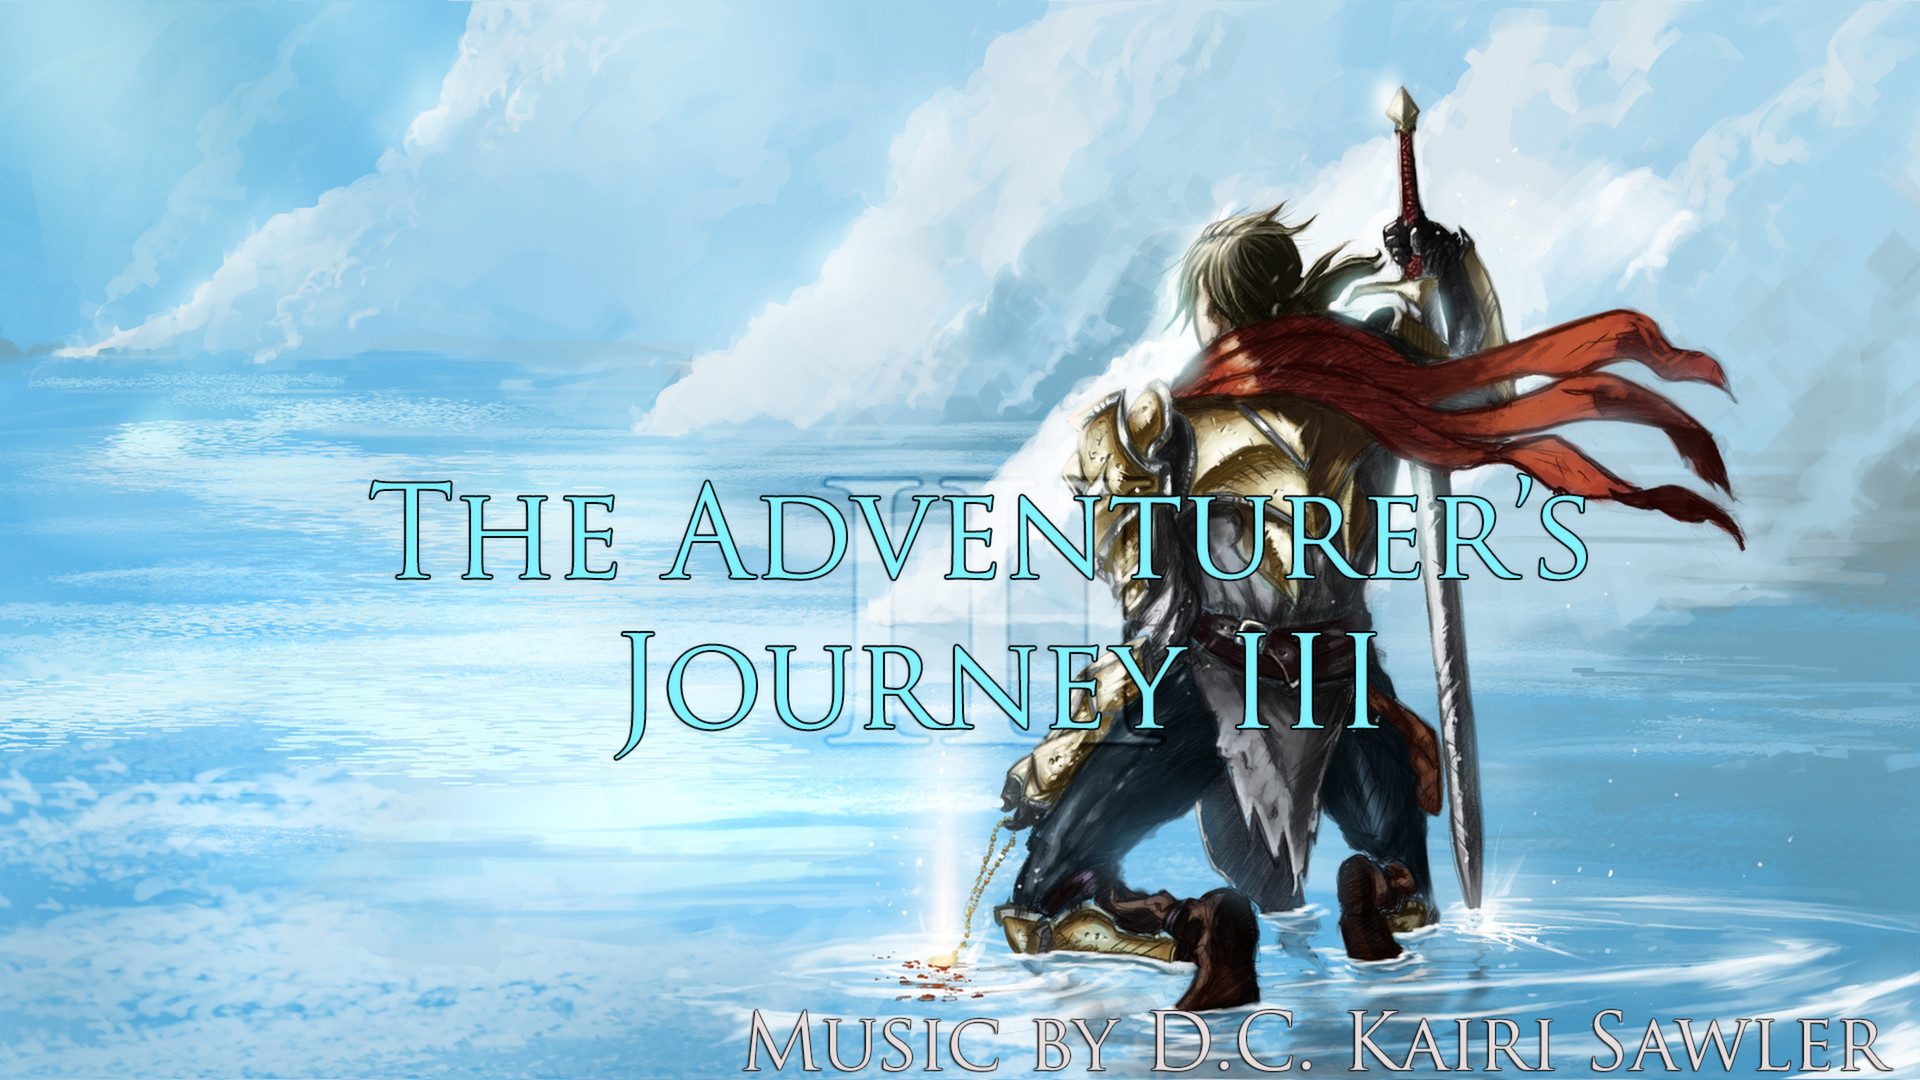 RPG Maker VX Ace - The Adventurer's Journey III DLC Steam CD Key, $4.51